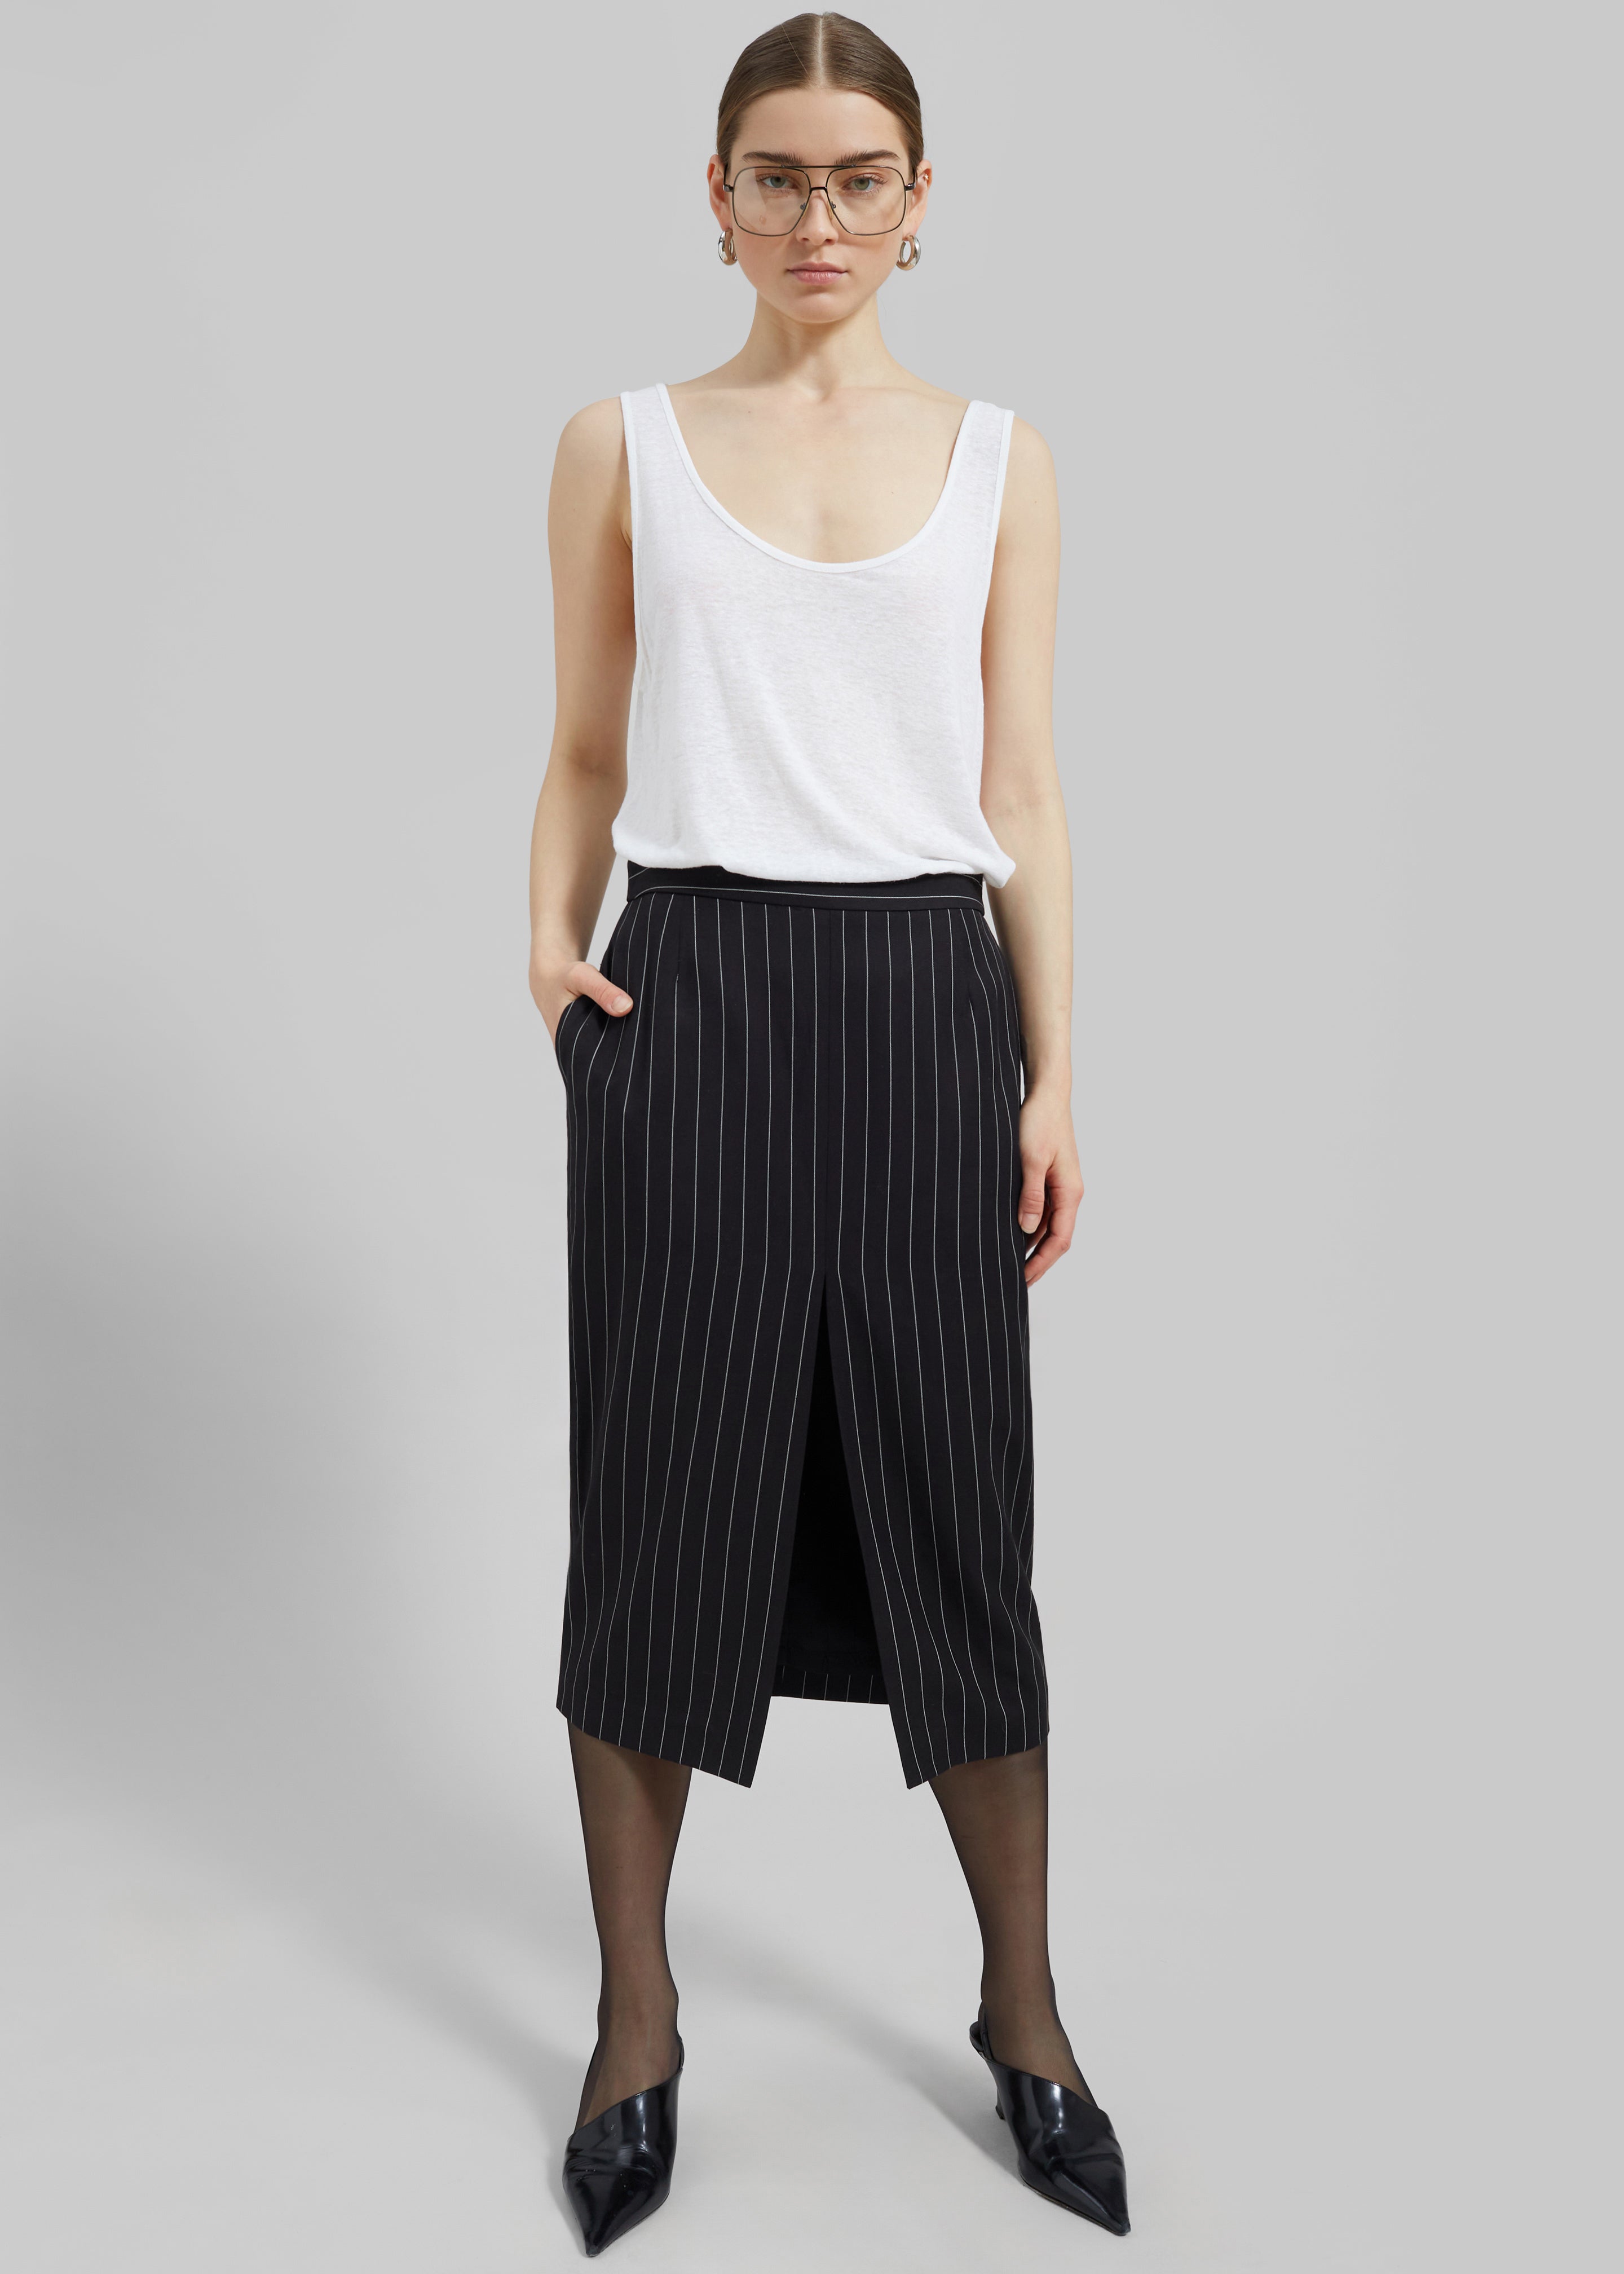 Holland Midi Slit Skirt - Black/White Pinstripe - 6